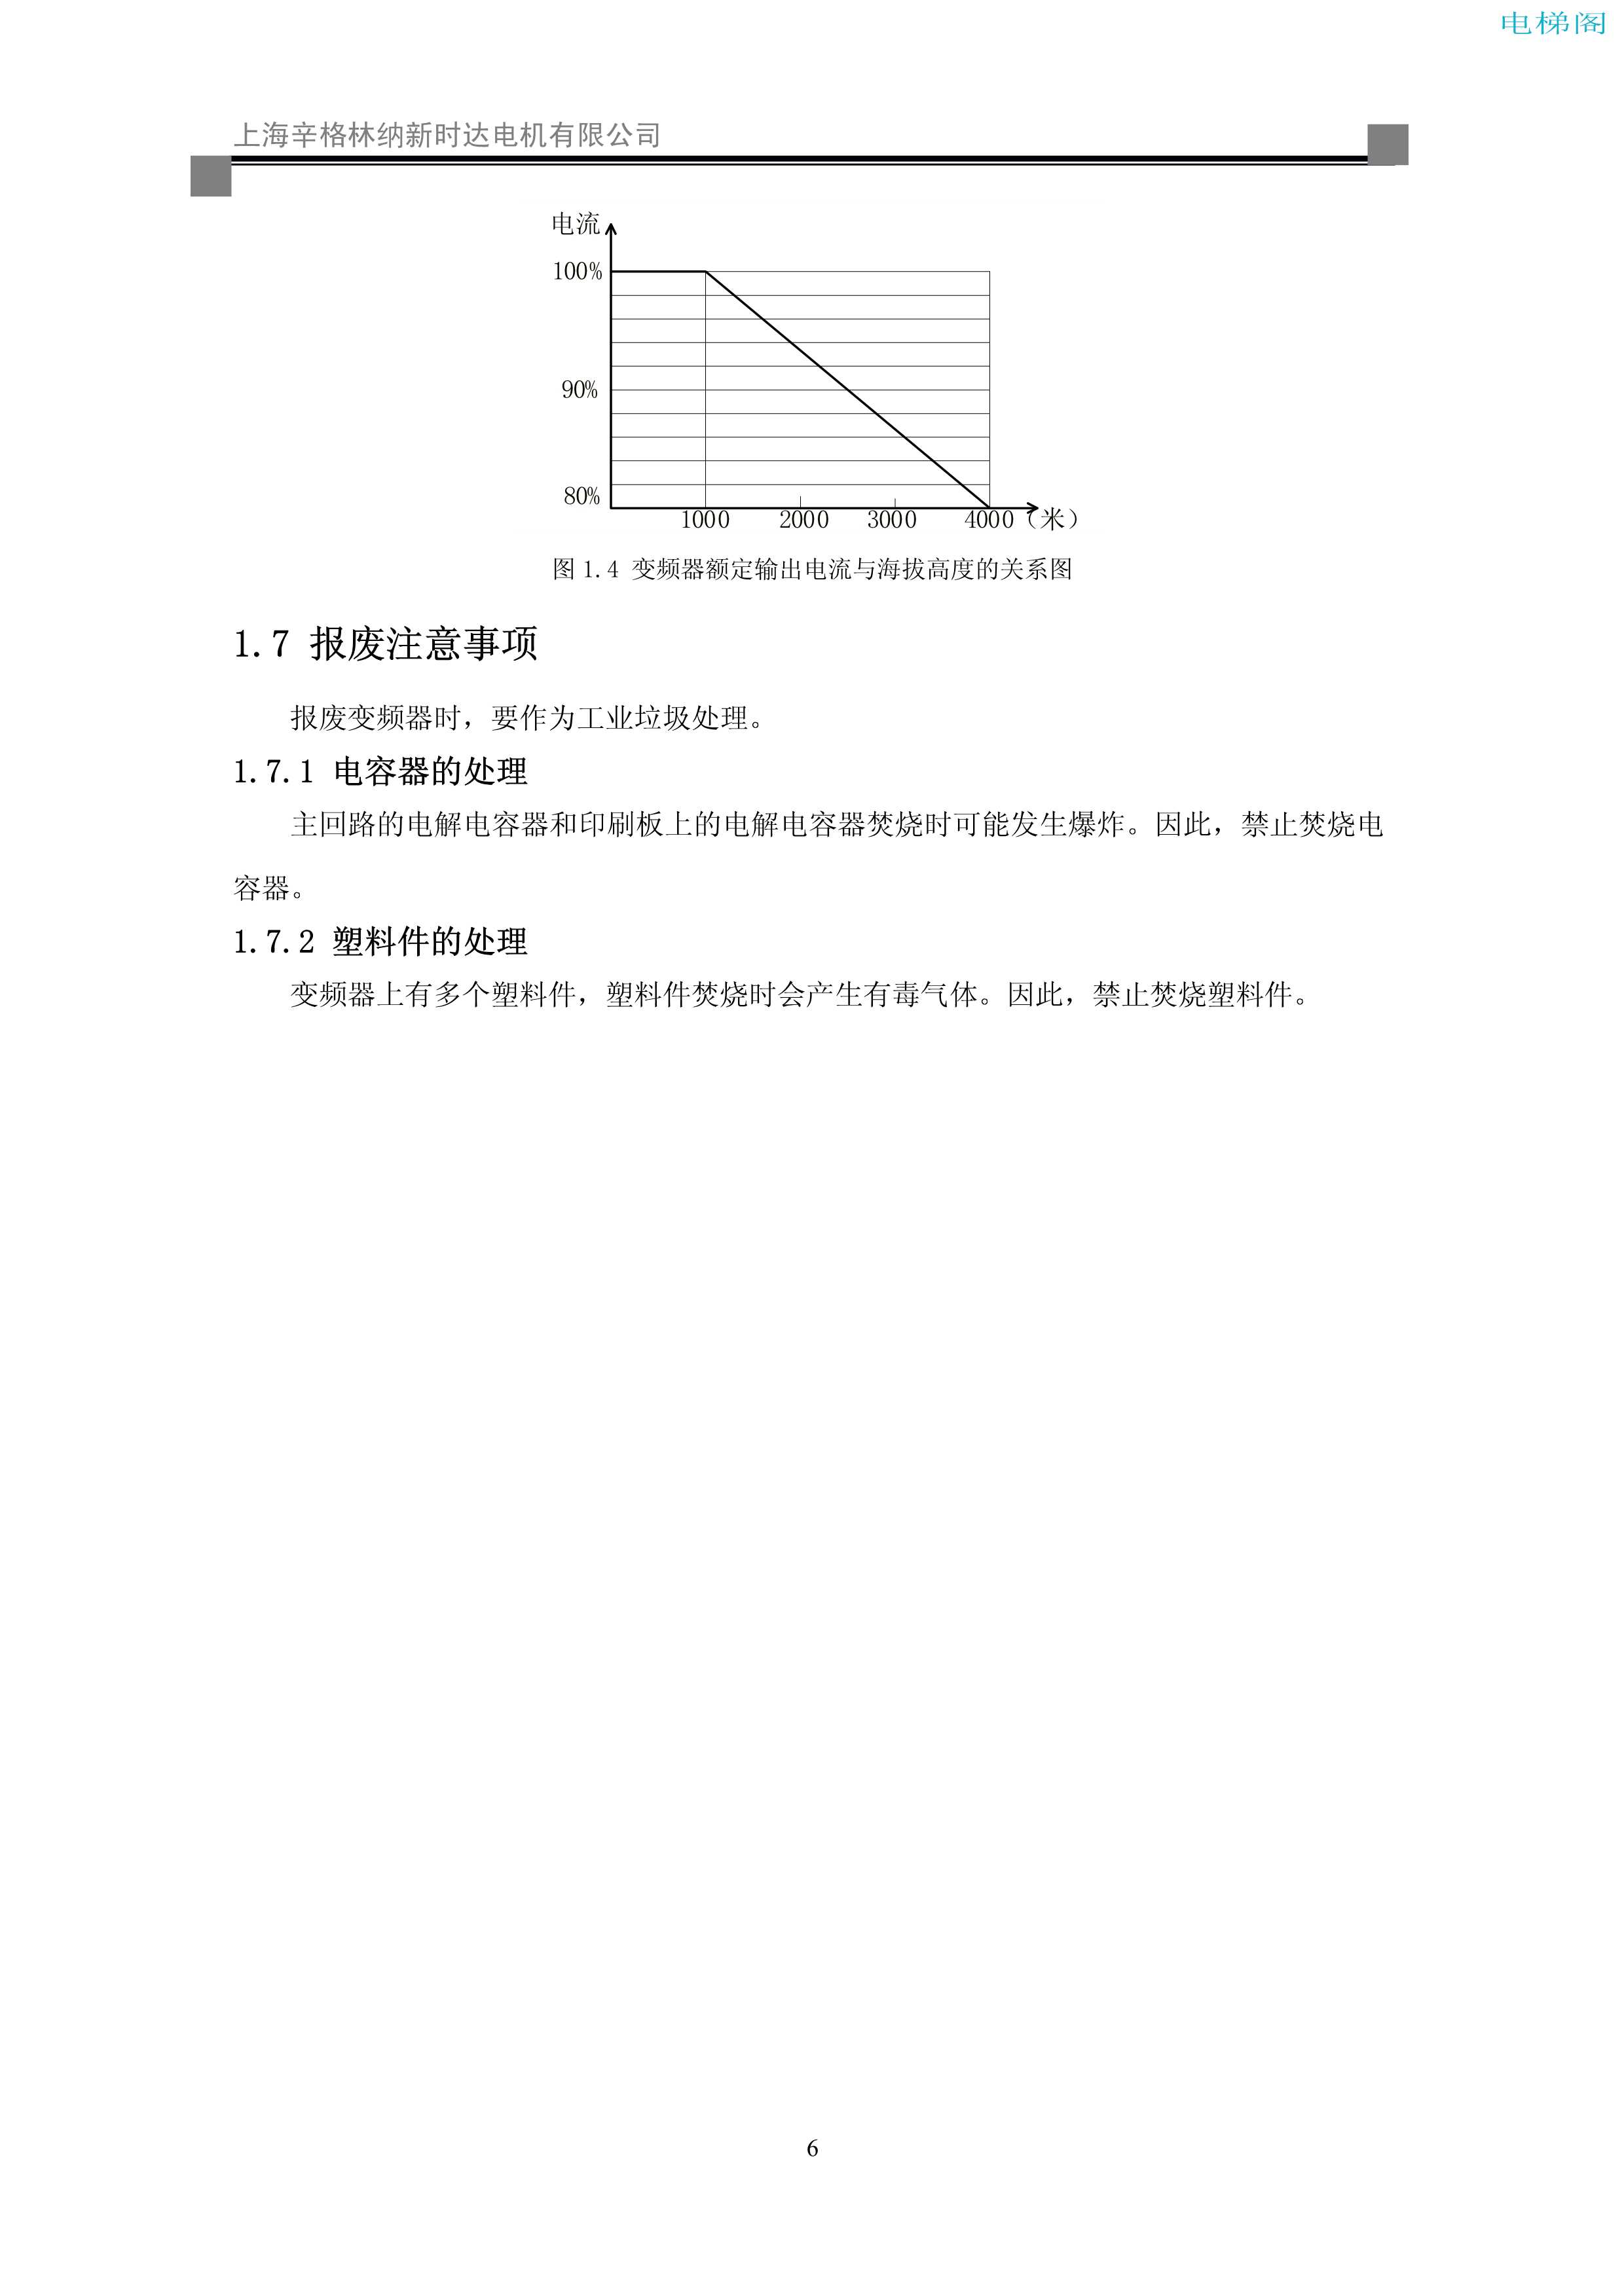 iAStar-S3系列电梯专用变频器使用说明书-9(V2[1].03)_14.jpg